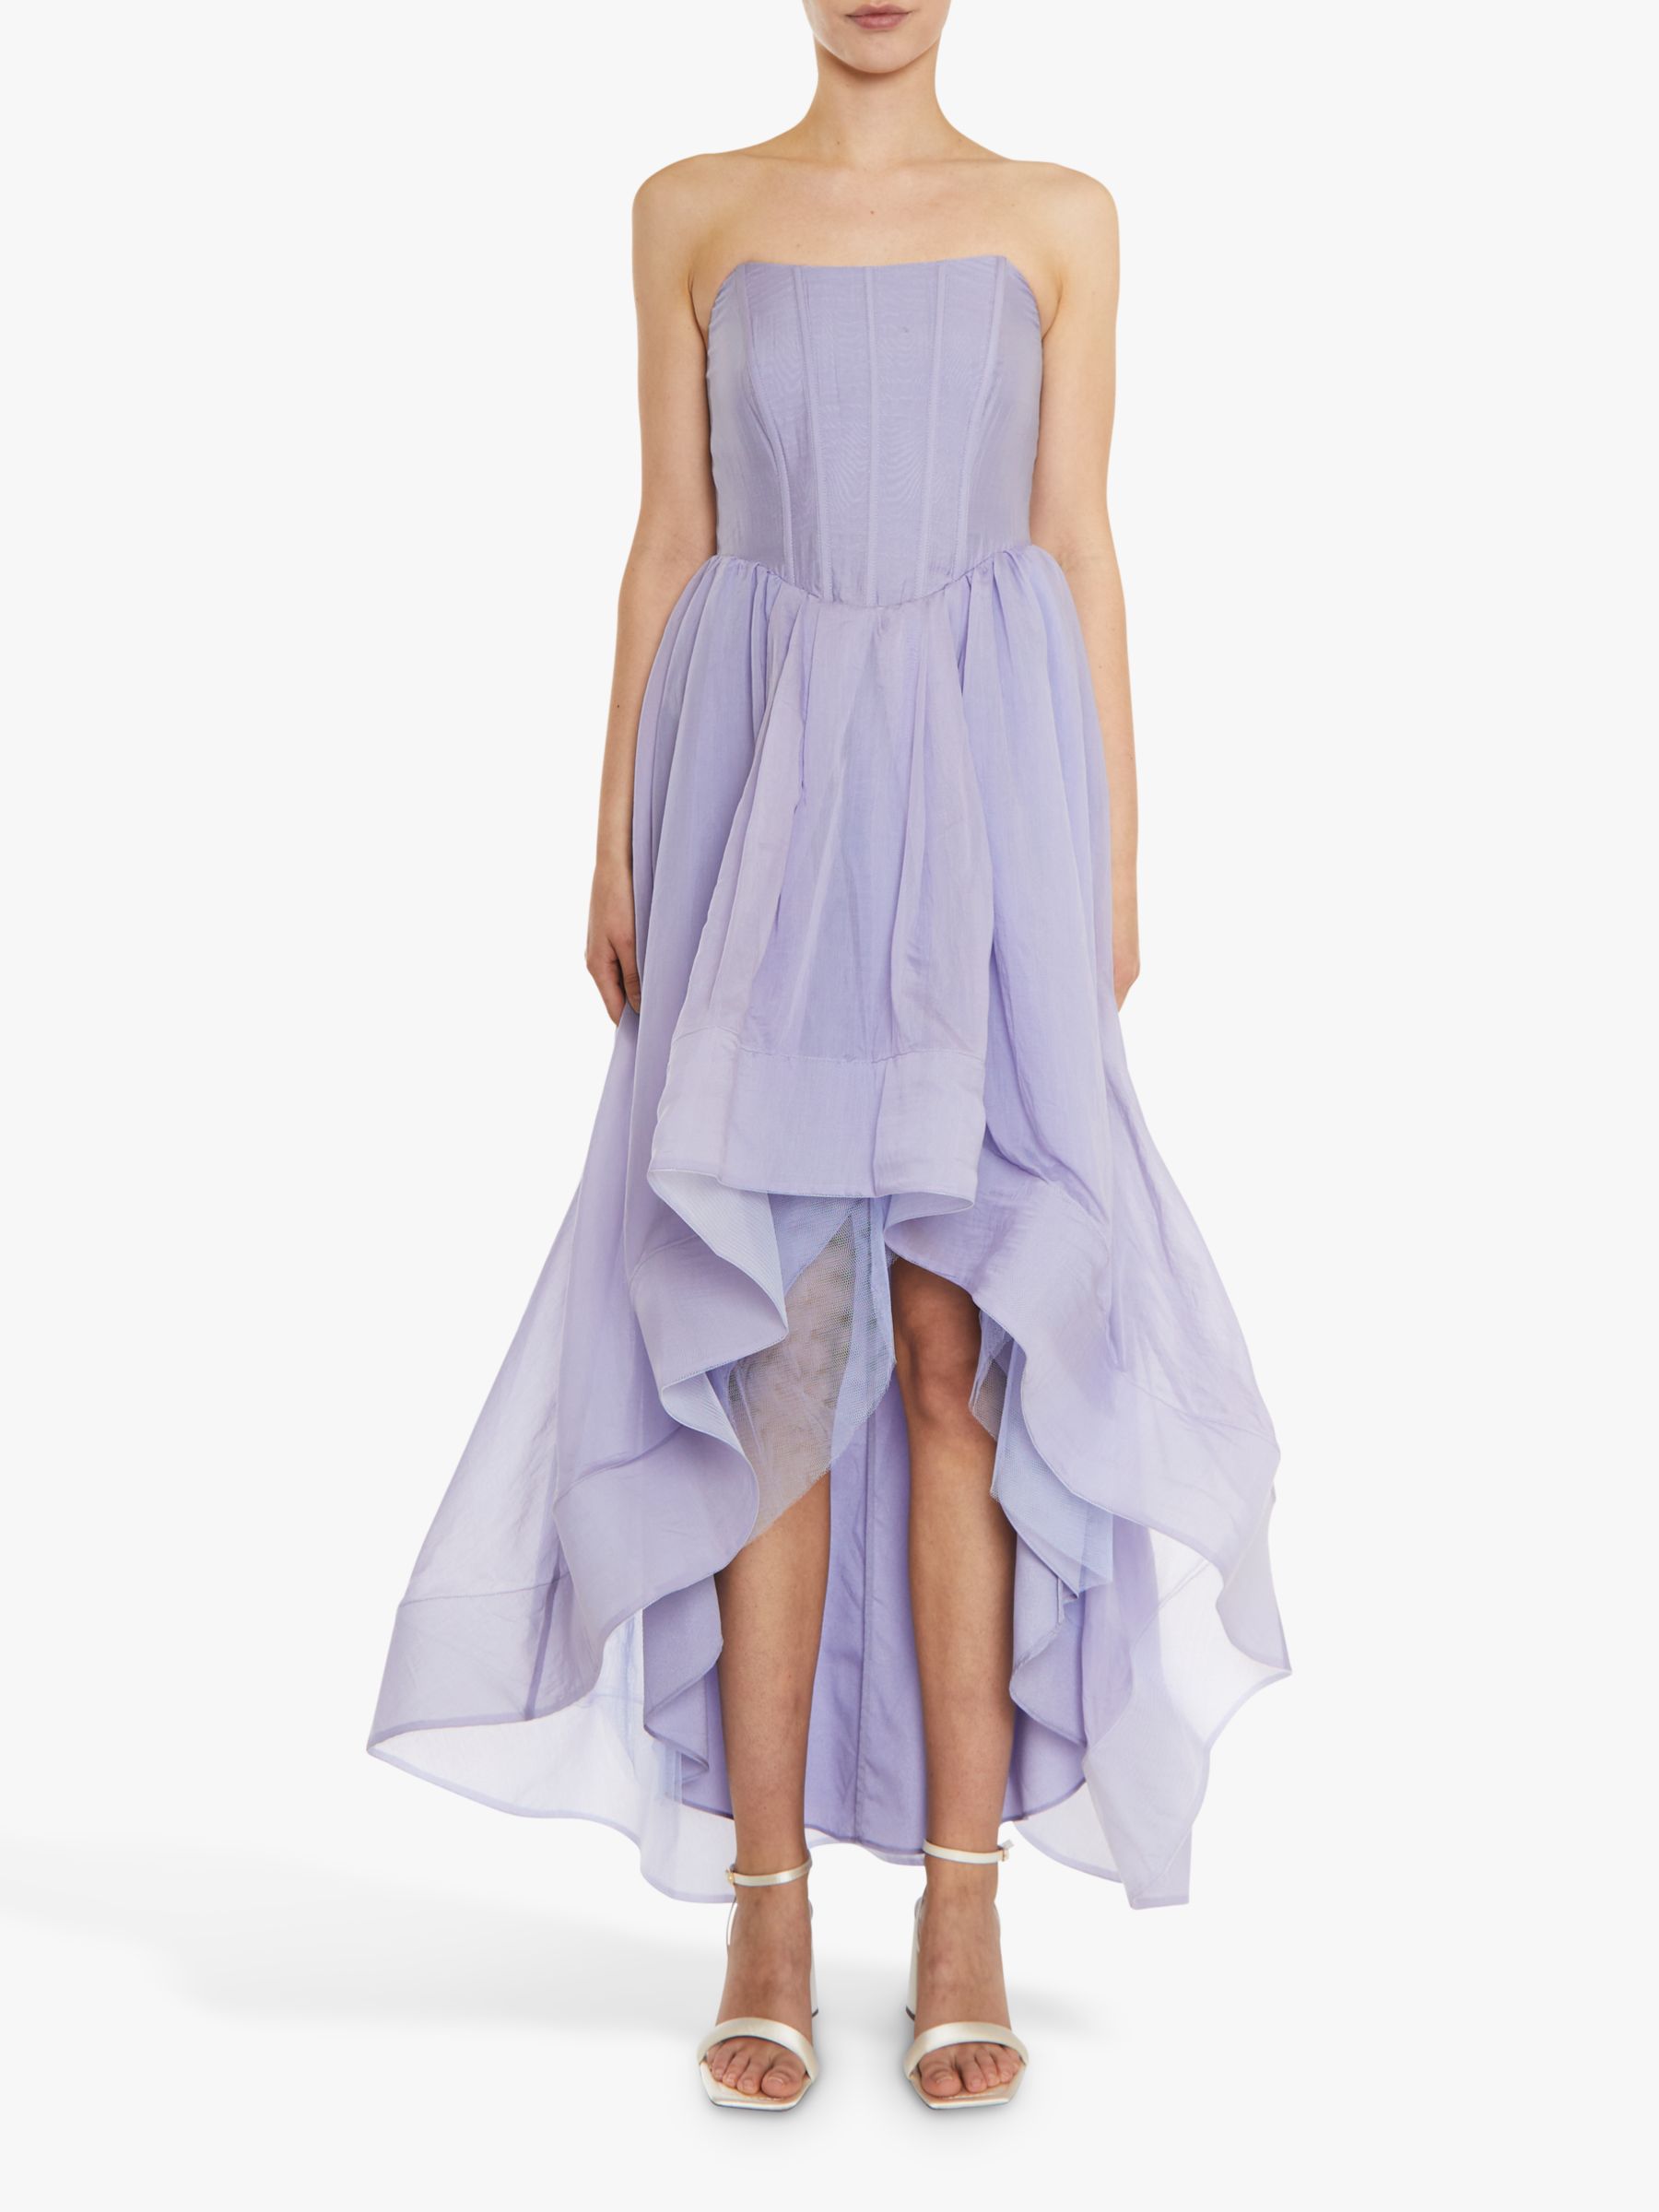 True Decadence Winnie Corset Style Hi-Low Dress, Hydrangea, 6